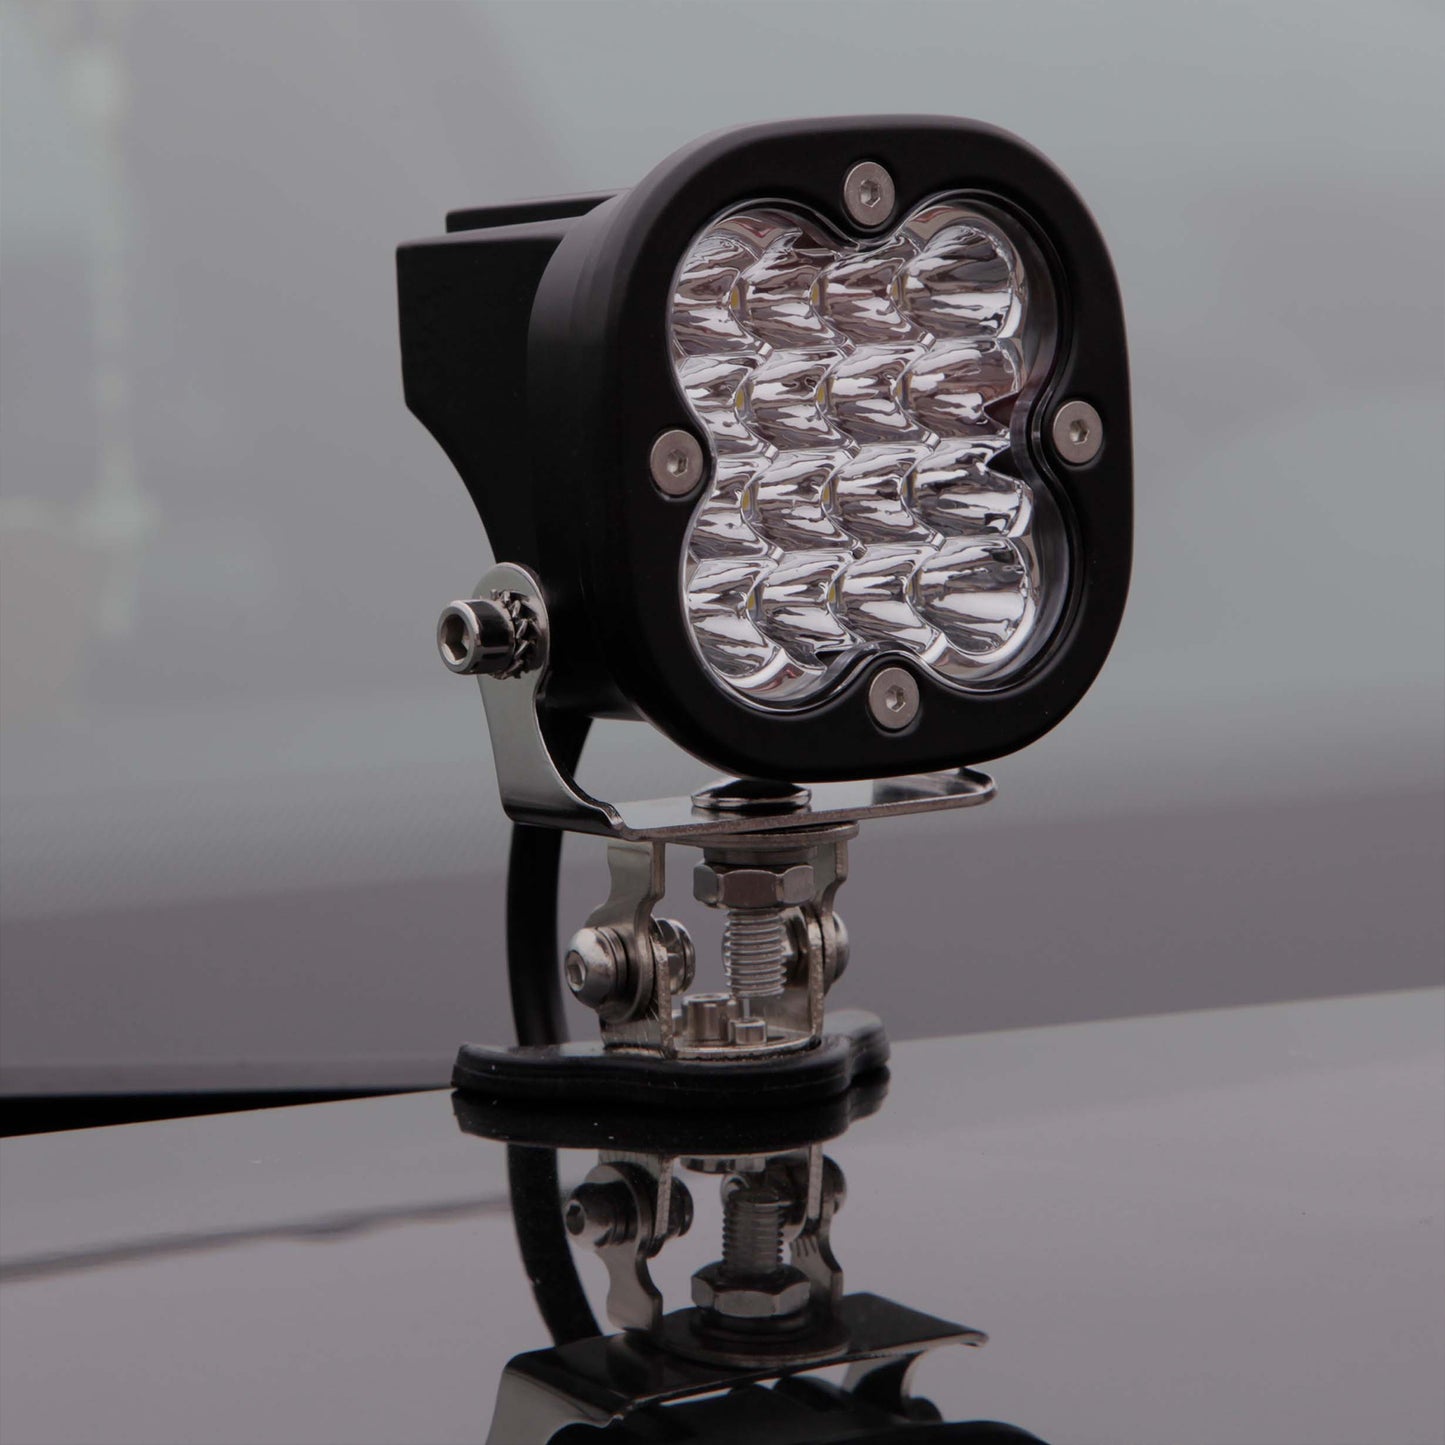 LEDClamp Solo Adjustable Universal Light Mount